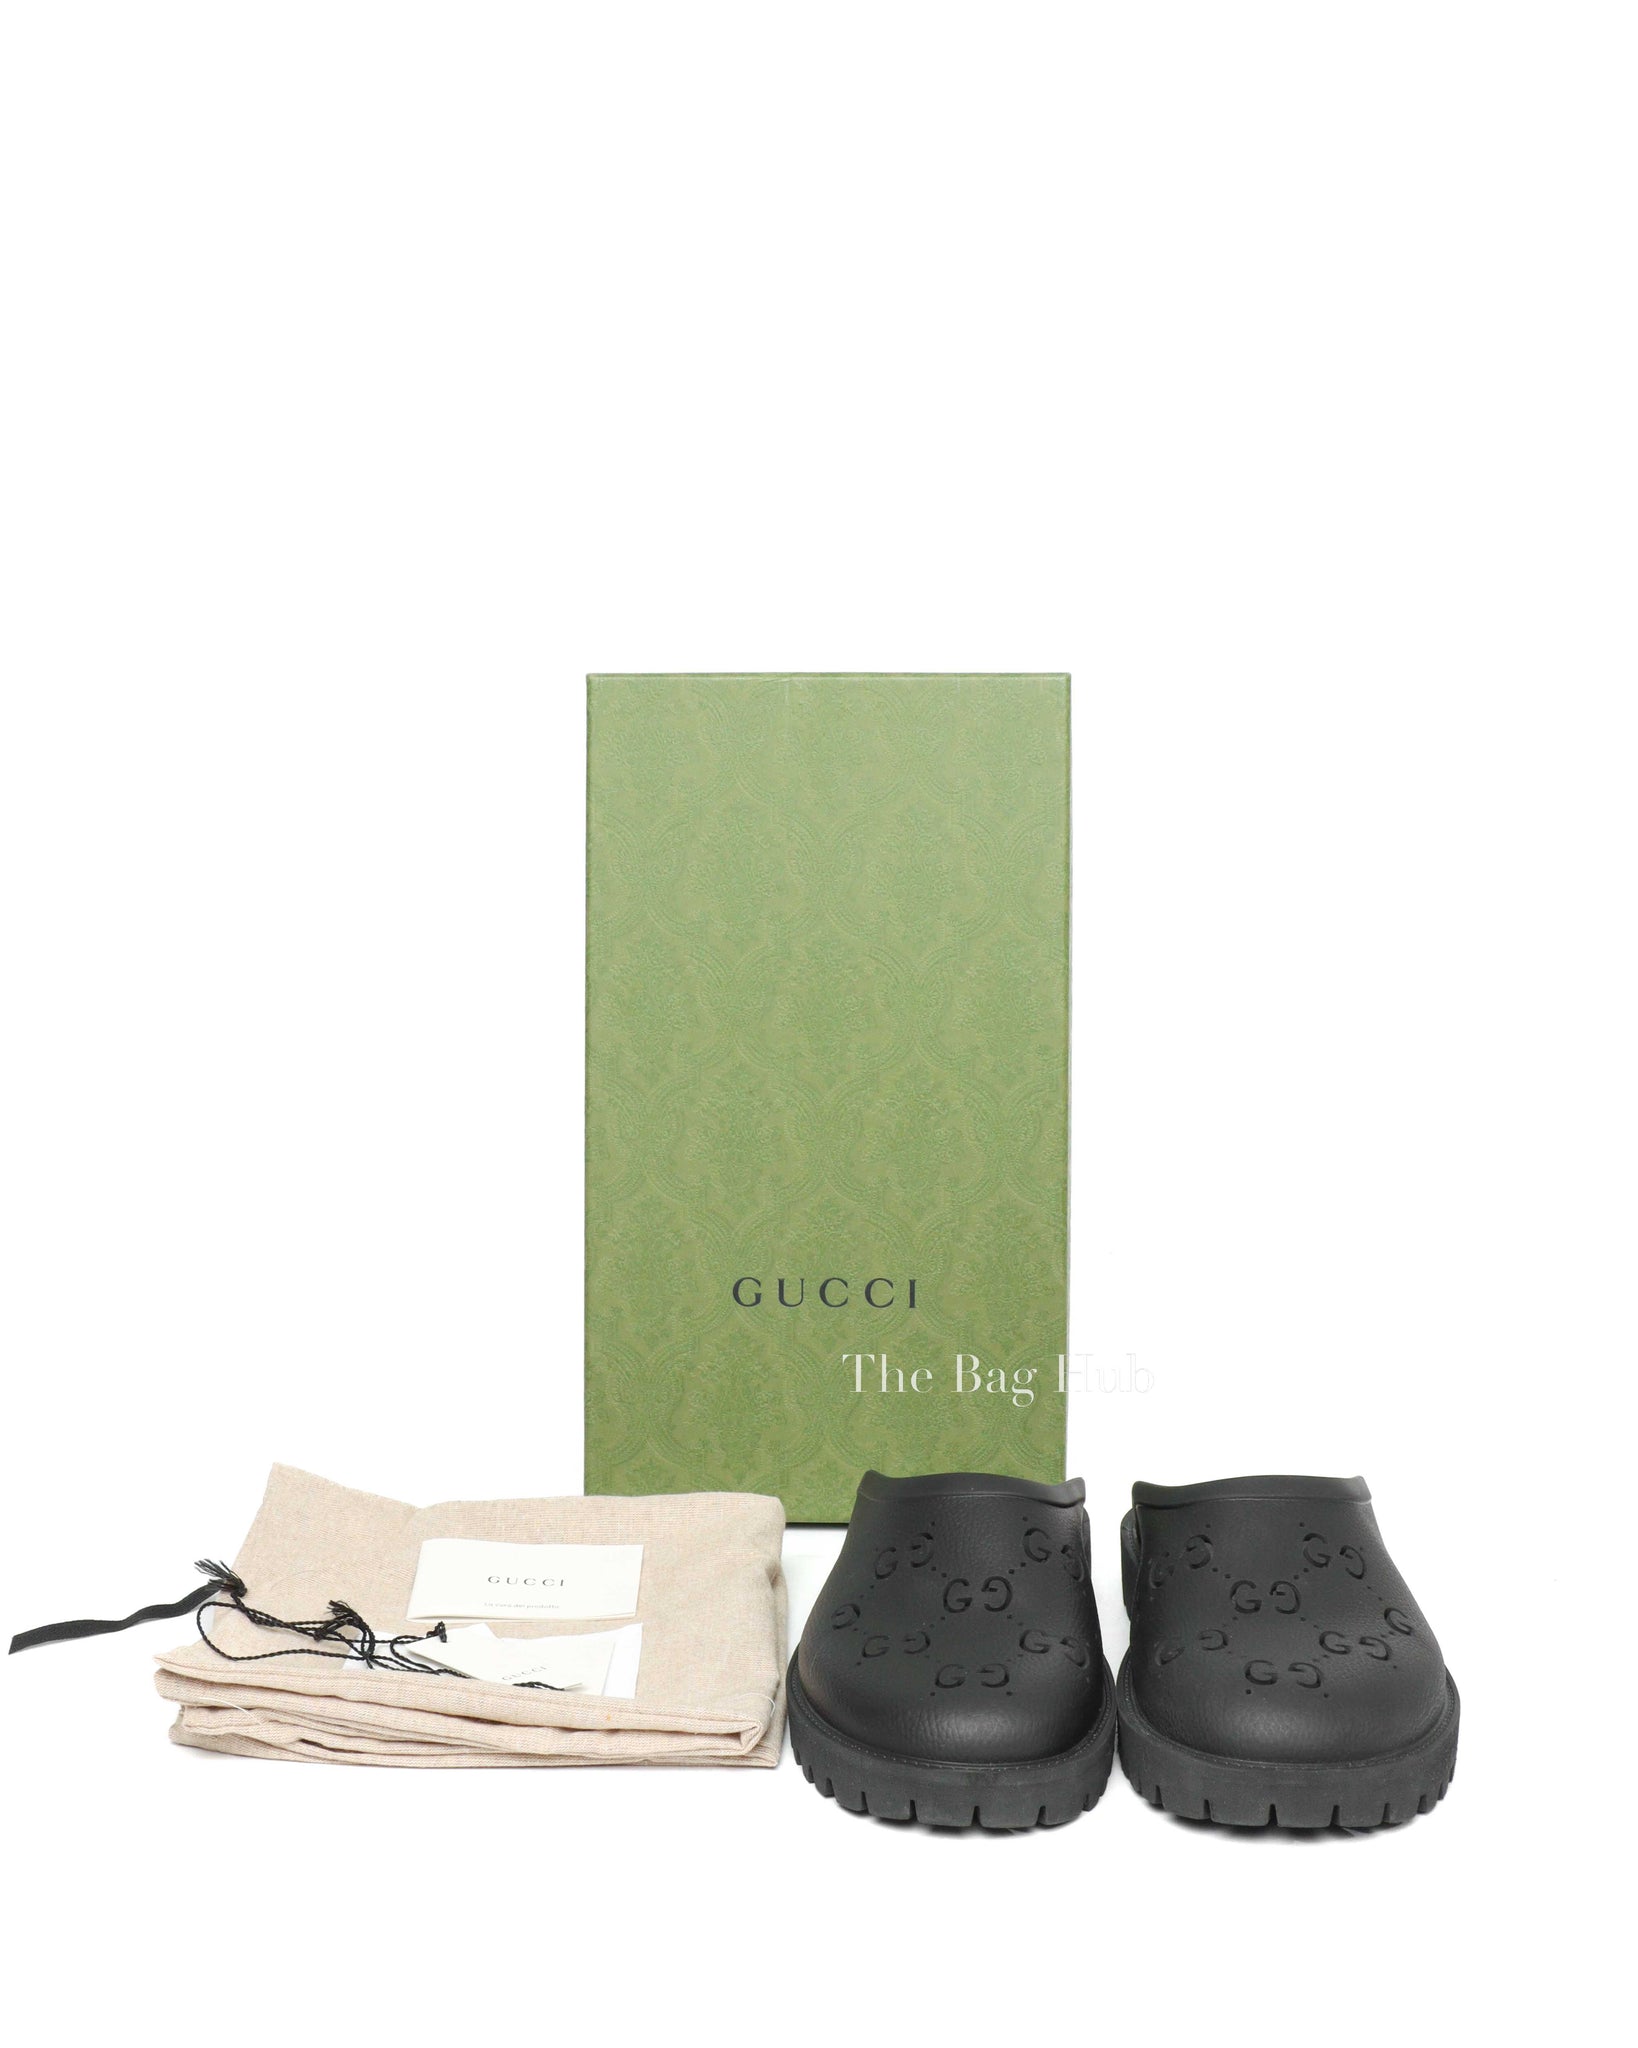 Gucci Black Rubber Men's Slip On Sandals Size 9-9